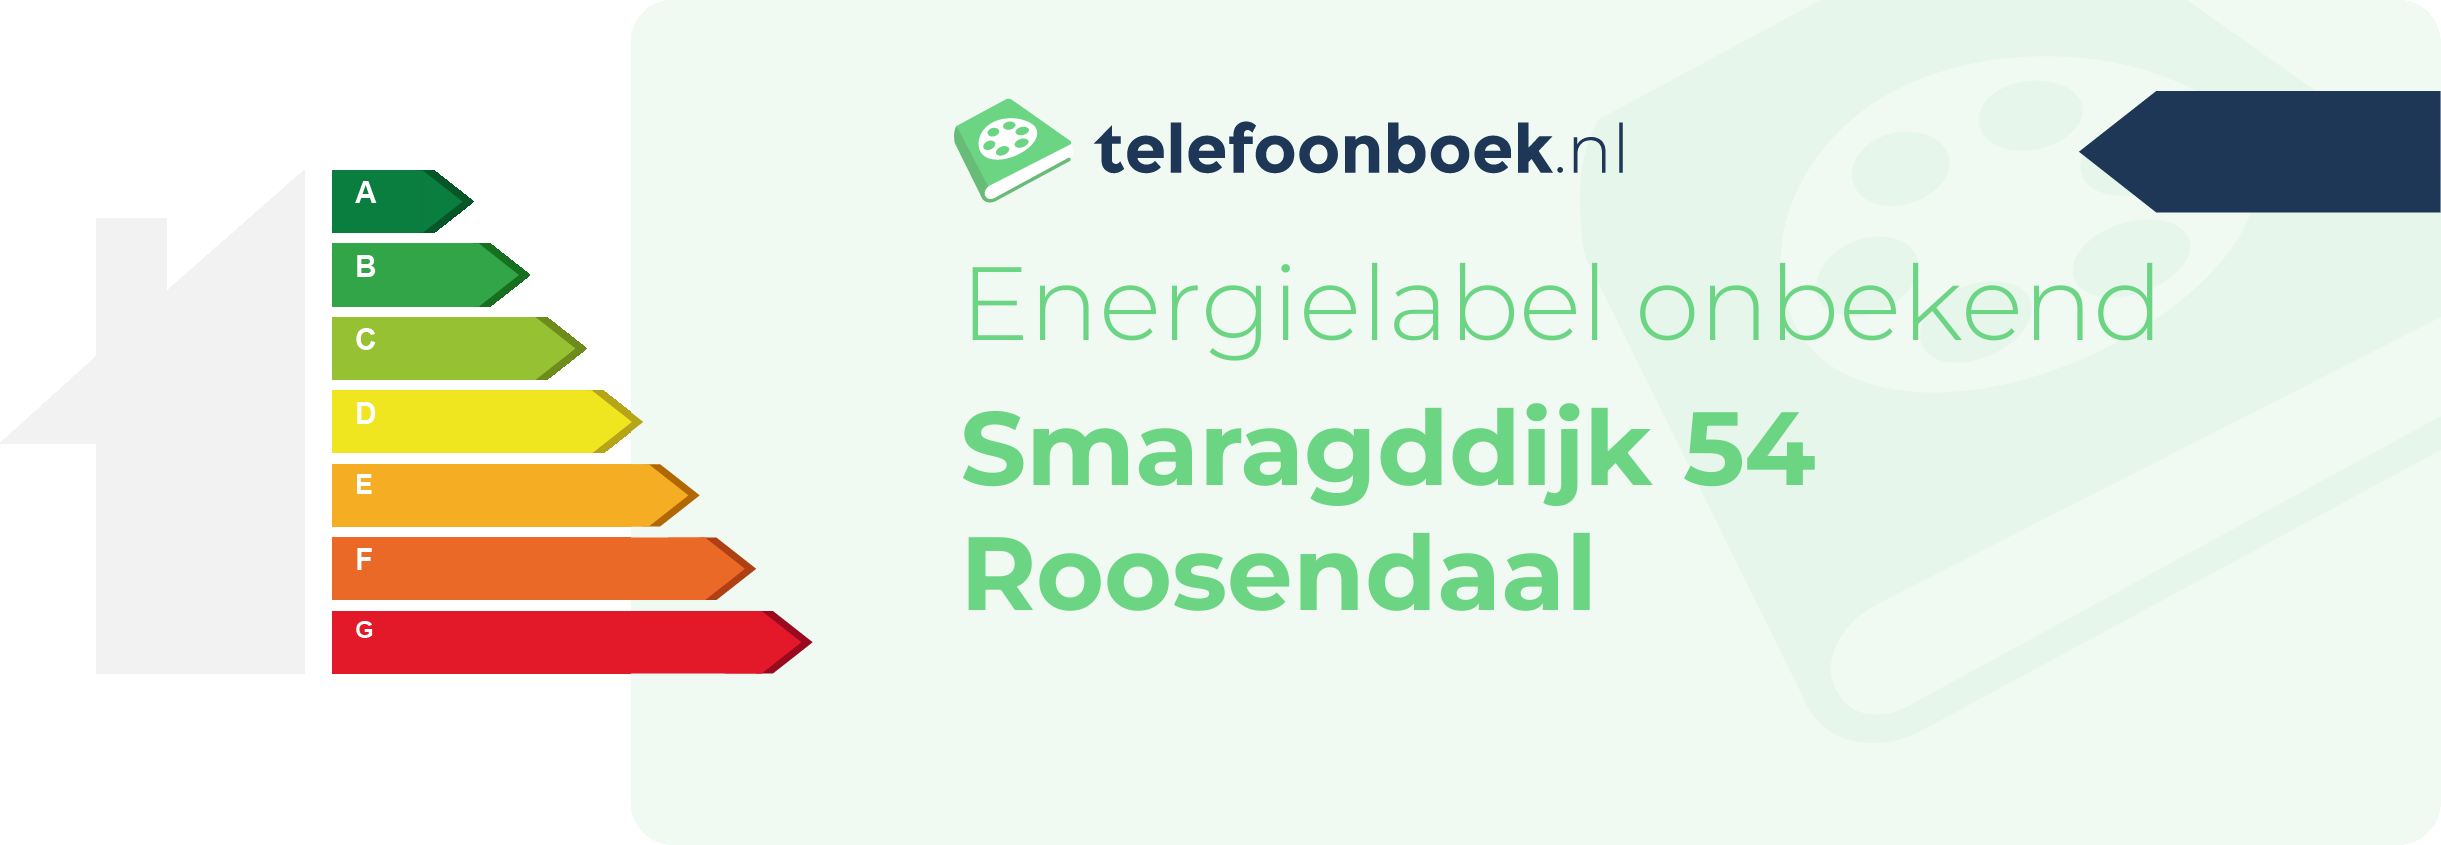 Energielabel Smaragddijk 54 Roosendaal